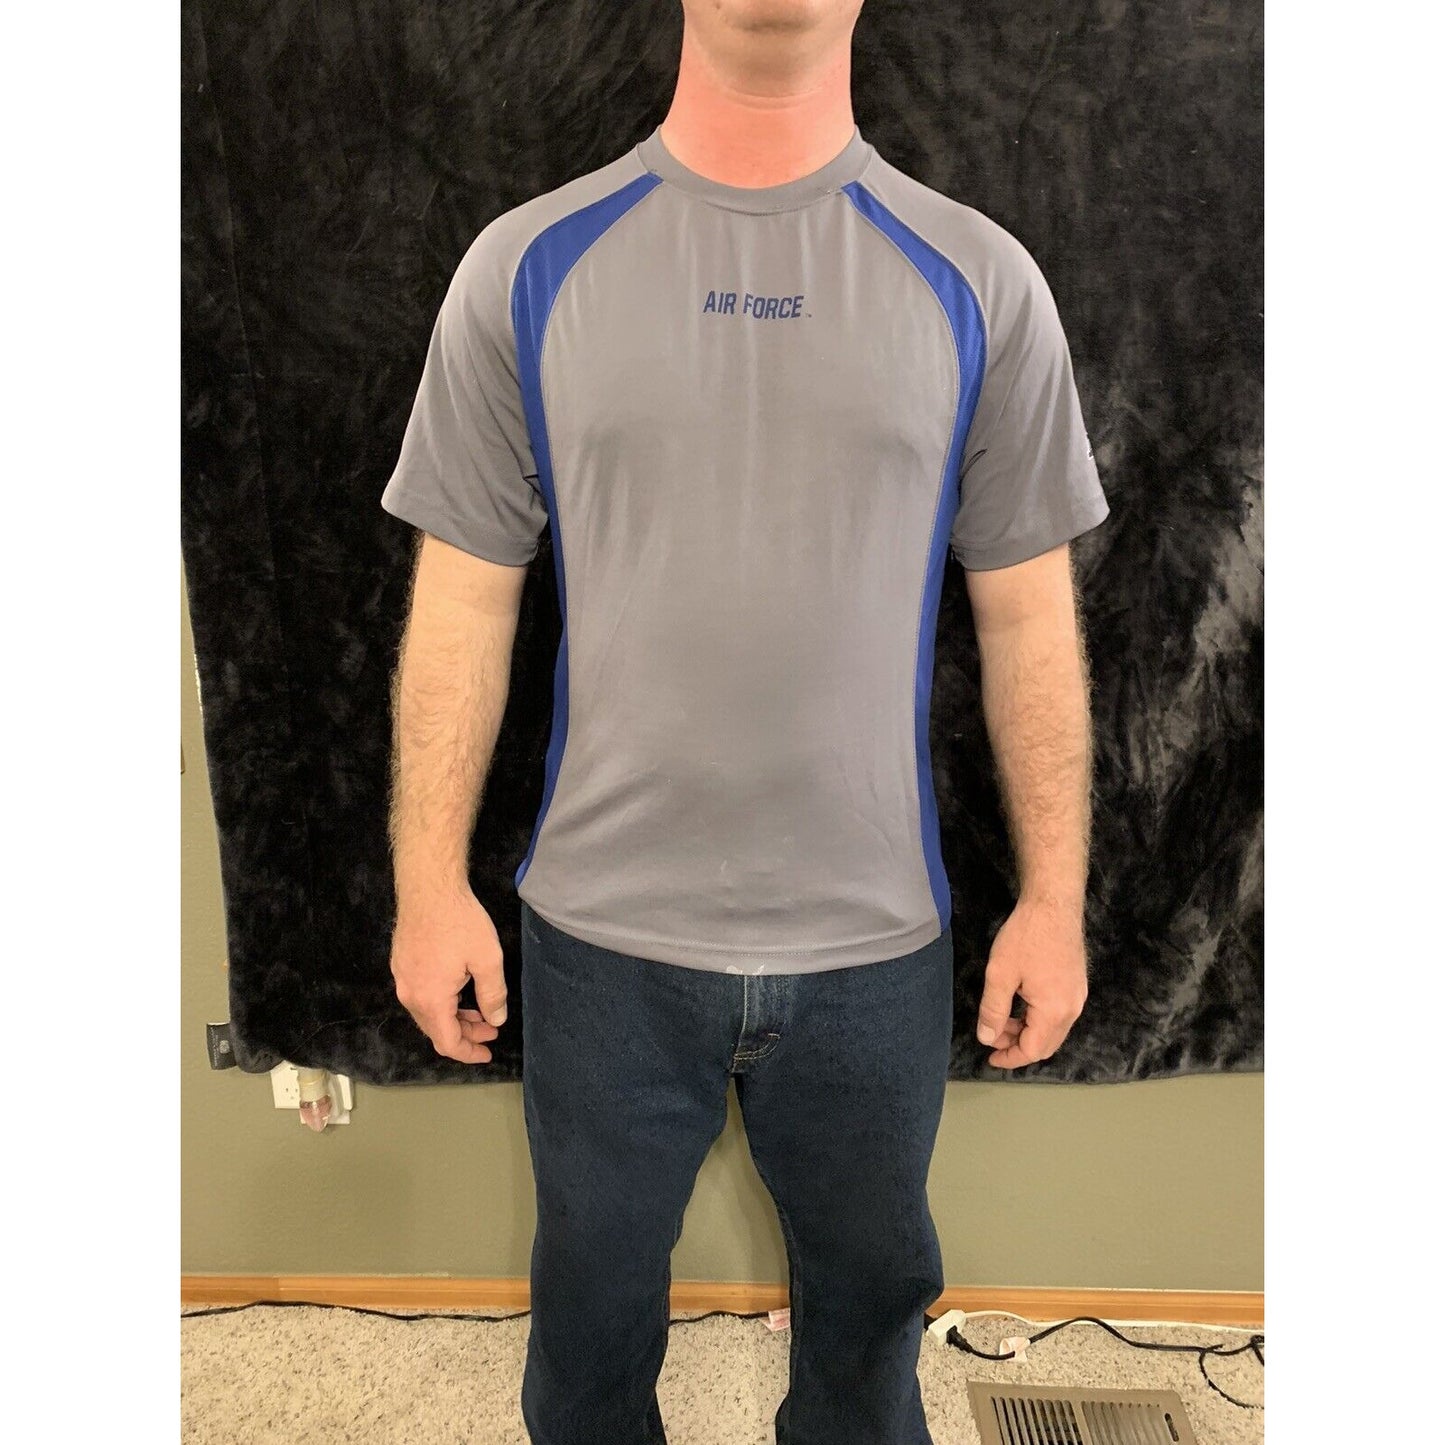 Air Force AF Workout Shirt Campus Heritage Grey And Blue Medium